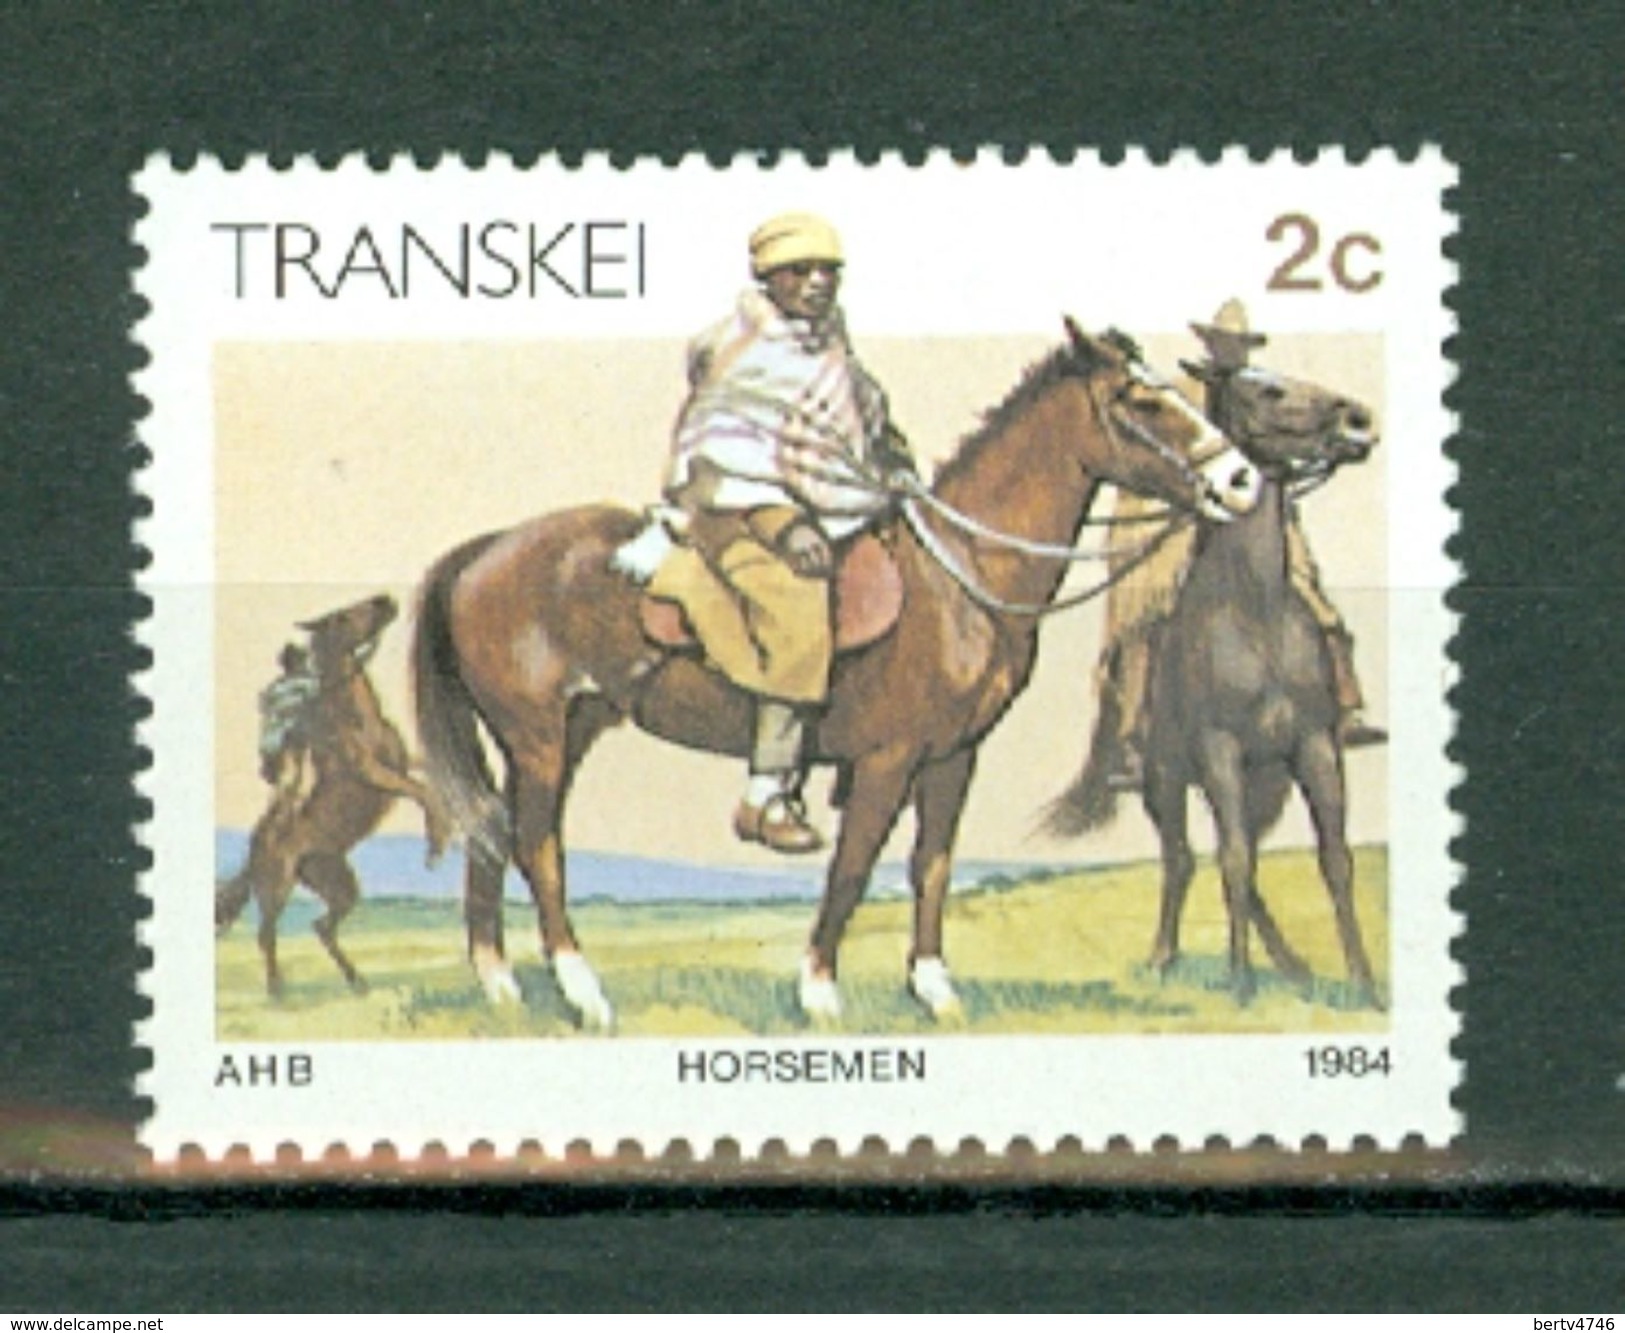 Transkei 1984  Mi 138**, SG 139**, Sc 130** Horsemen - Horses / Paarden / Chevaux / Pferde Stamps**  MNH - Transkei